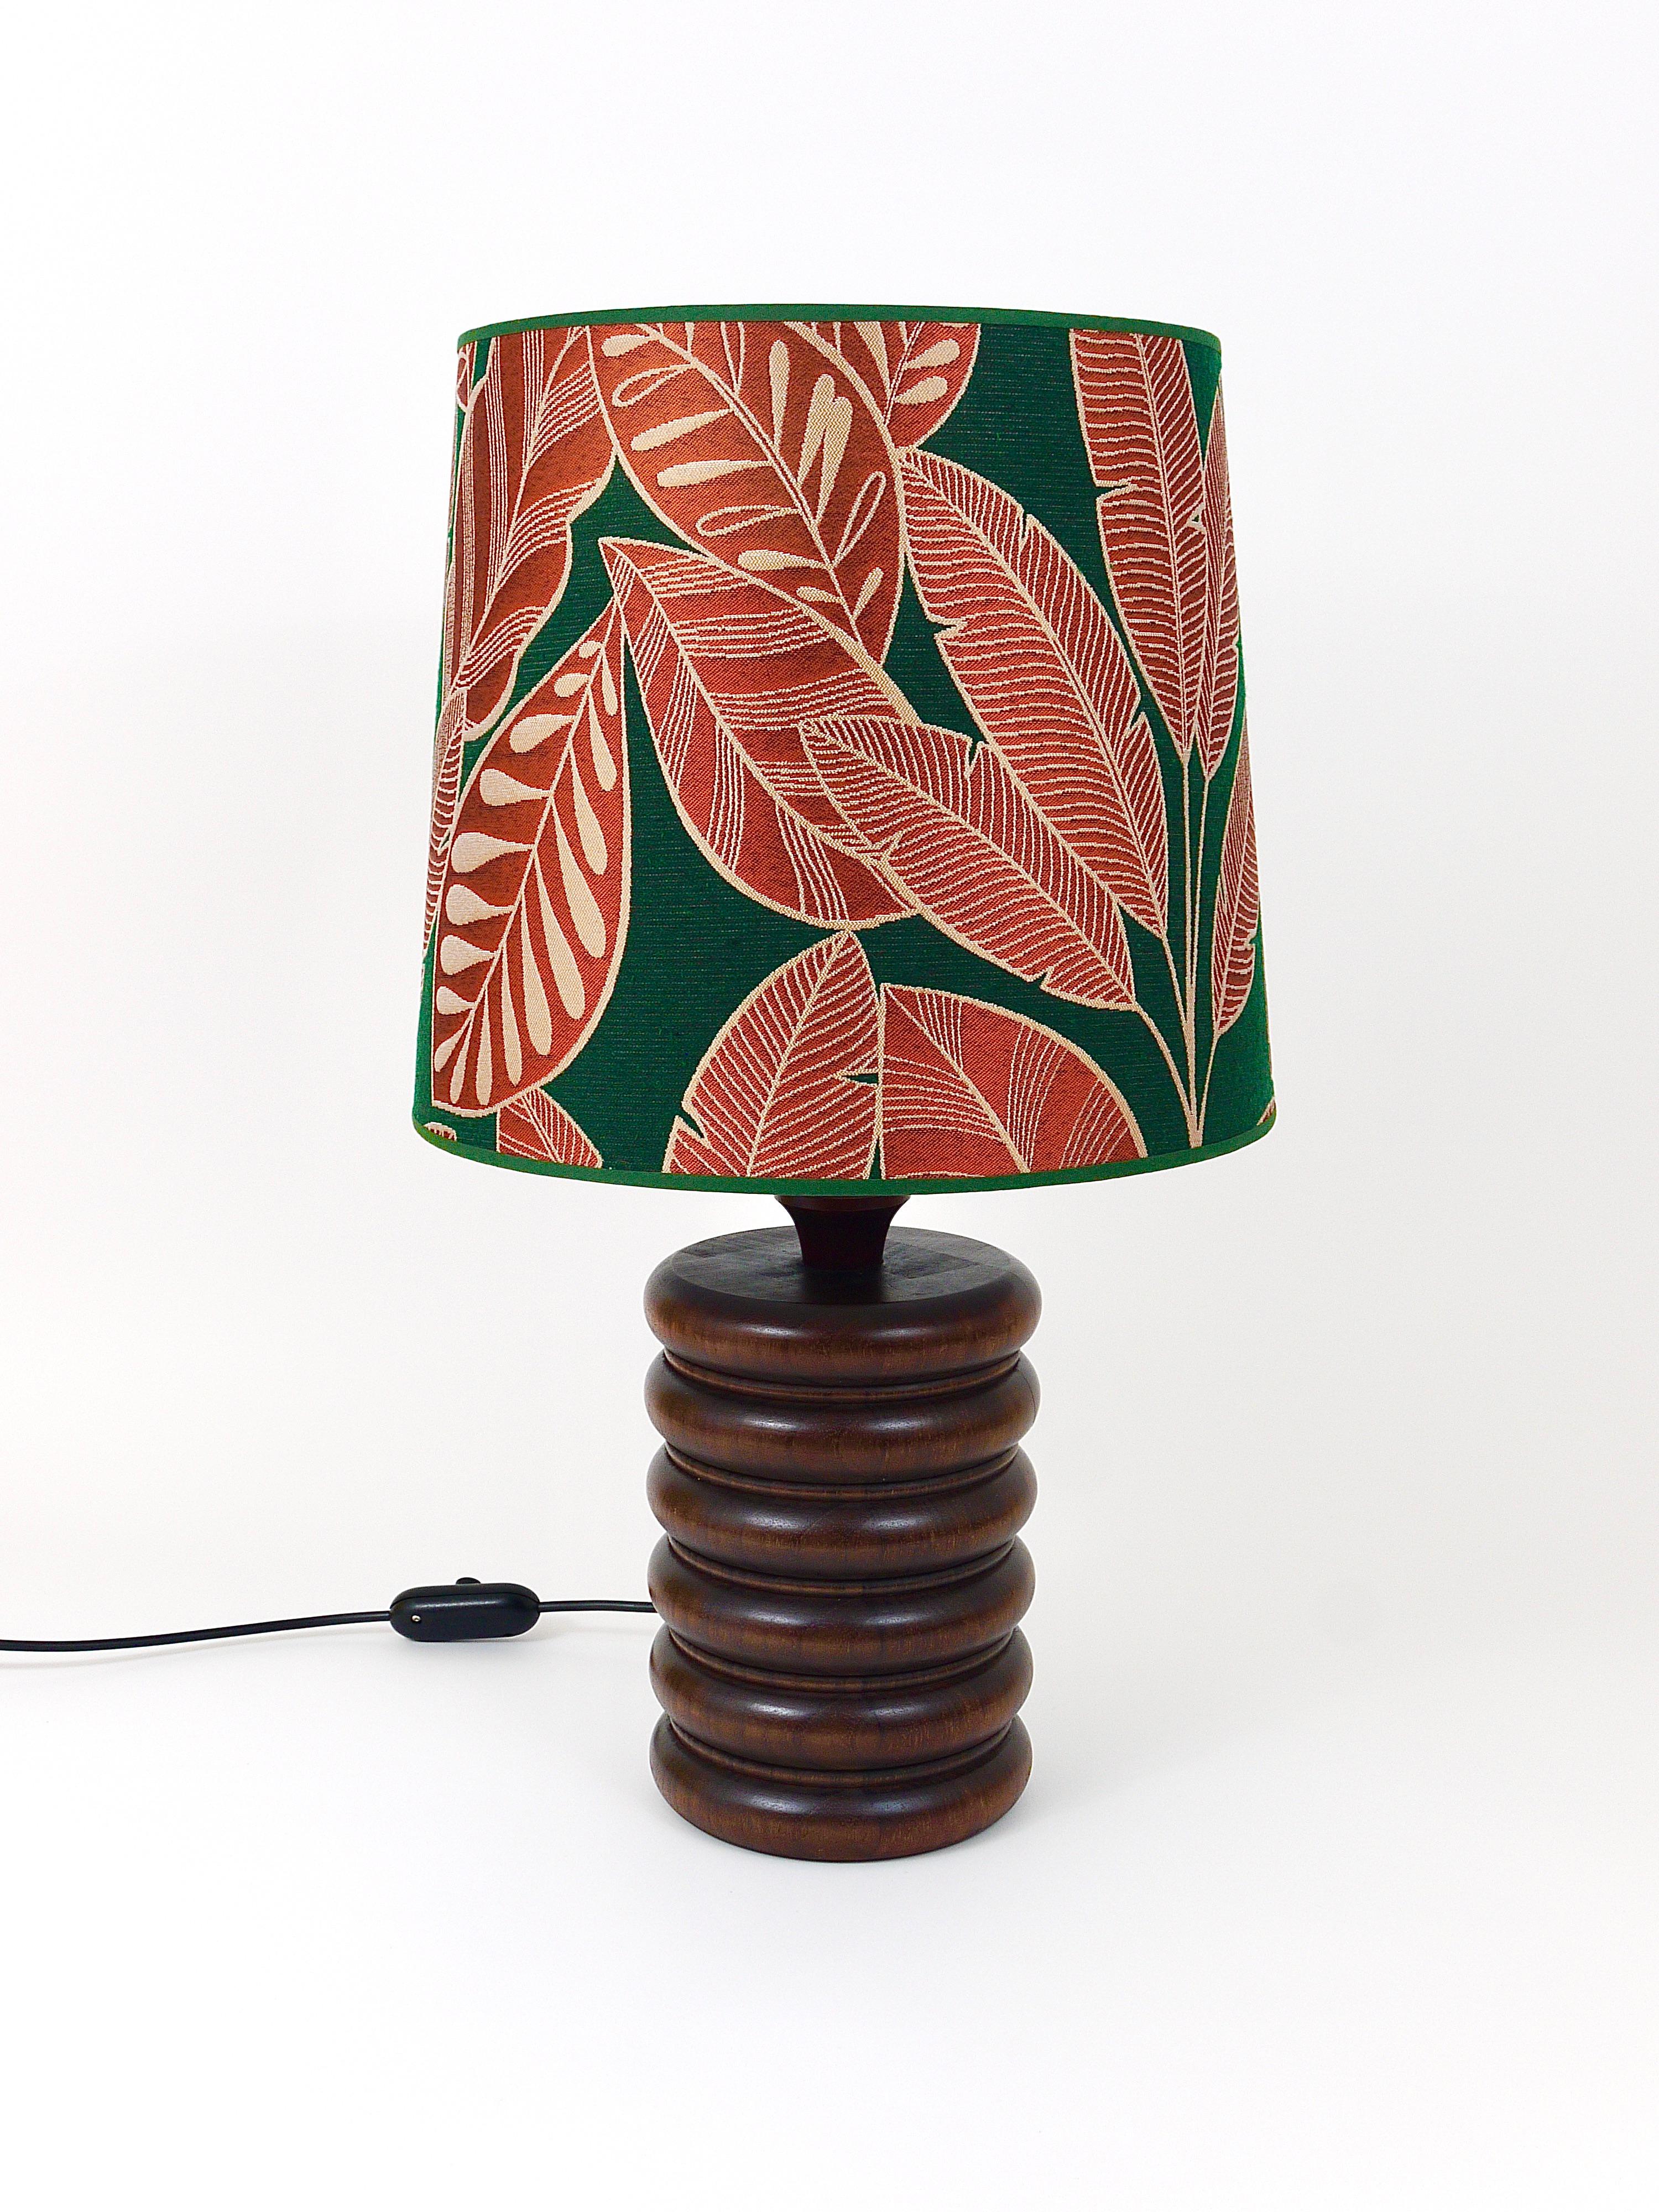 Midcentury Table or Side Lamp, Turned Wood Base, Sweden, 1970s For Sale 1